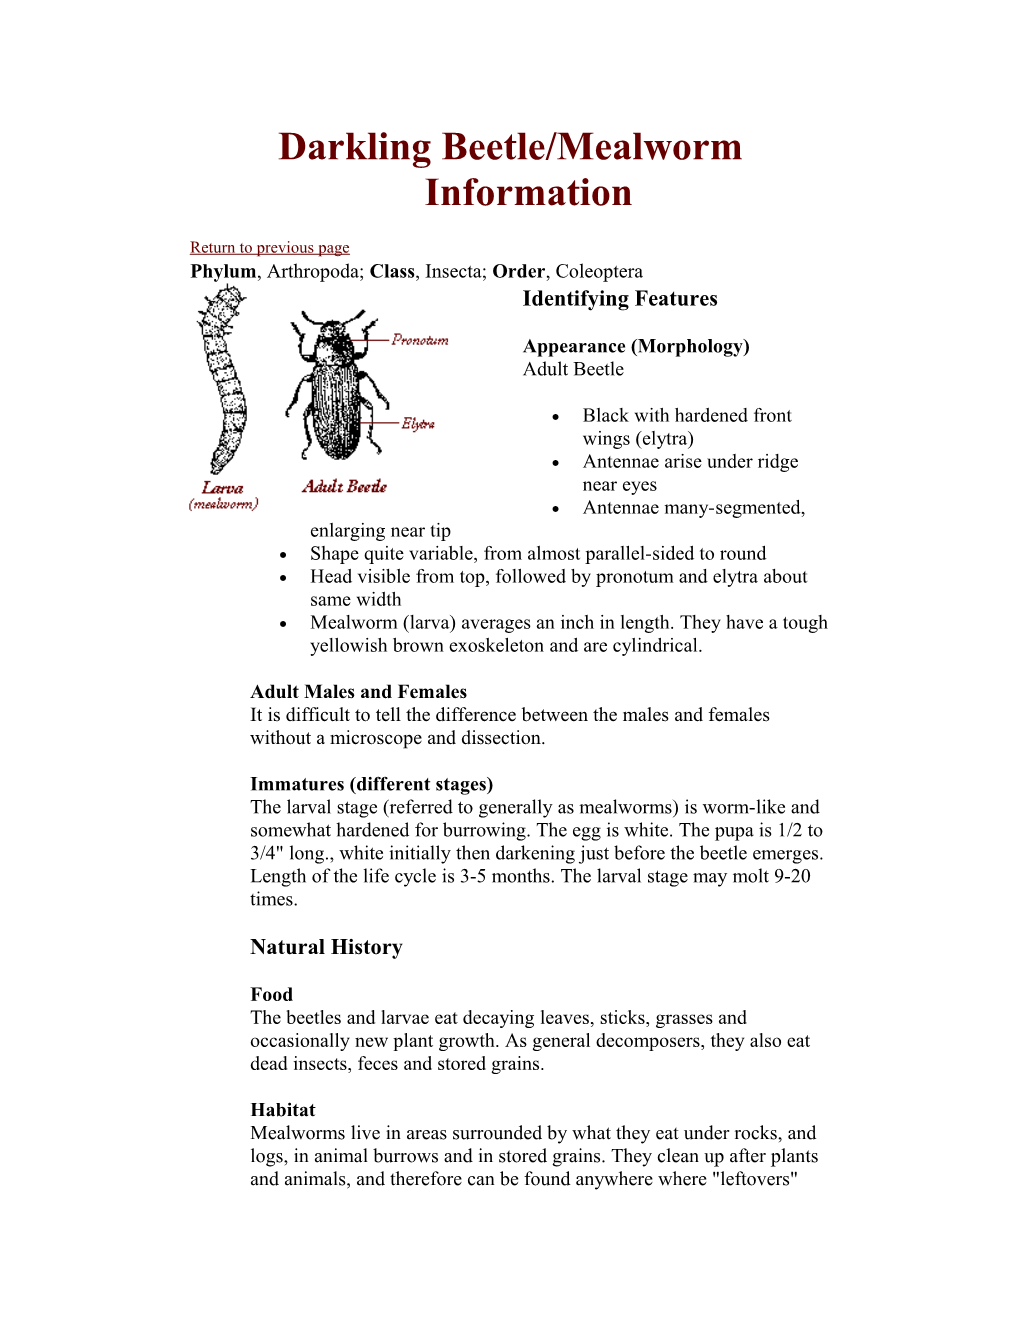 Darkling Beetle/Mealworm Information